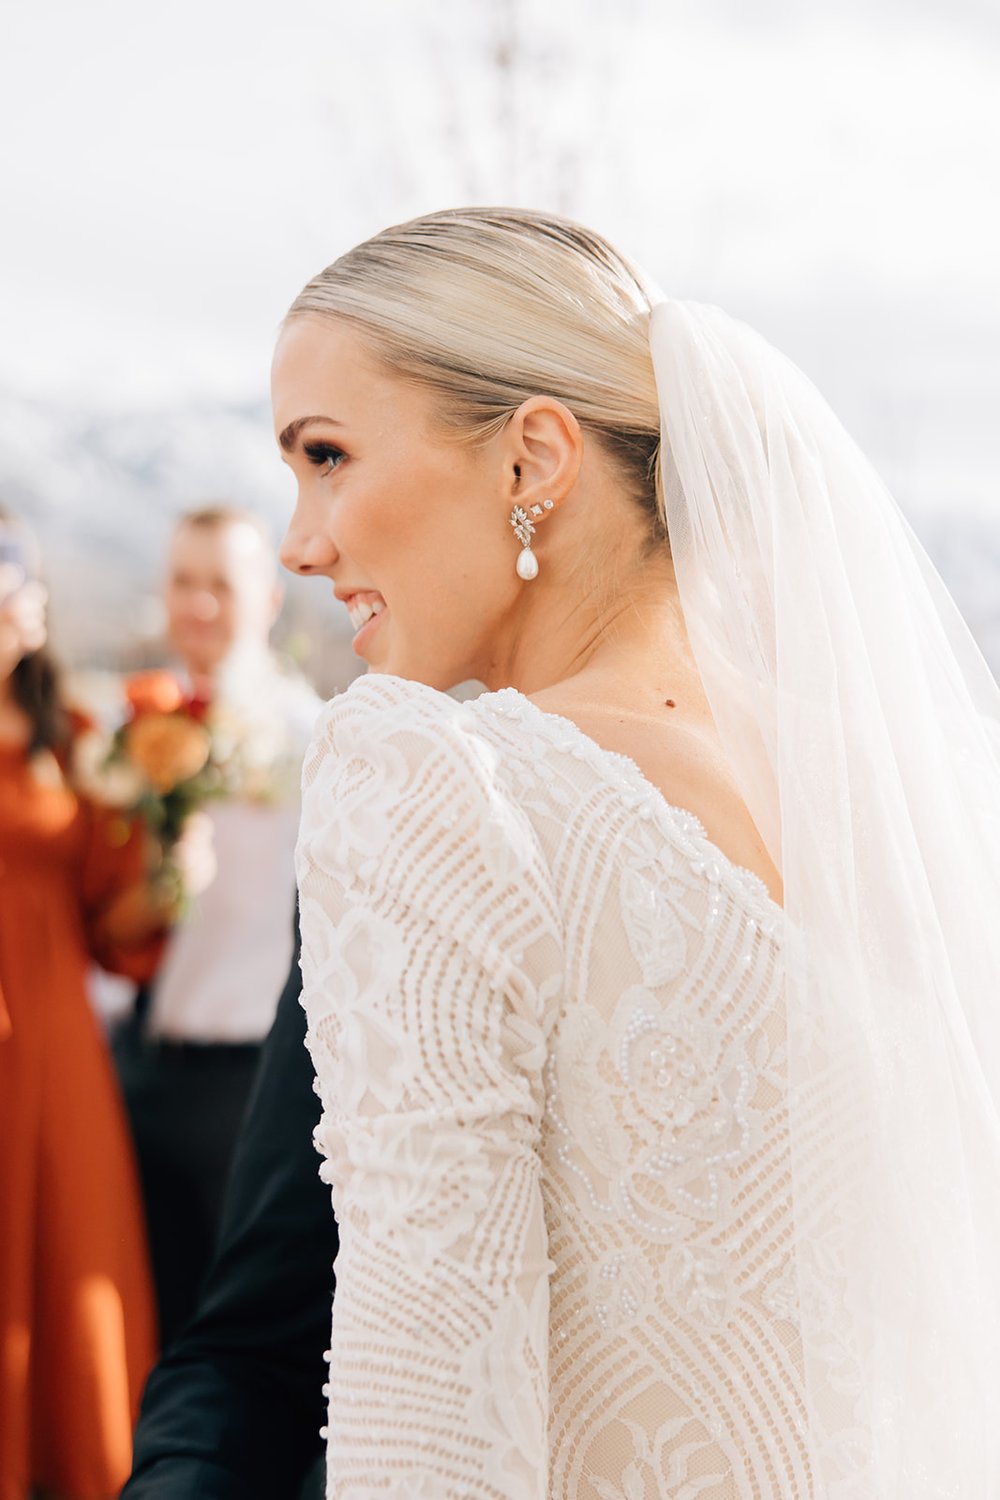 Anthology Print Wedding Invitations - Utah Wedding Venue - Utah Wedding Photographer - Boho Fall Wedding Inspiration - Utah Wedding Planner - River Bridge Wedding Venue3 (3).jpg